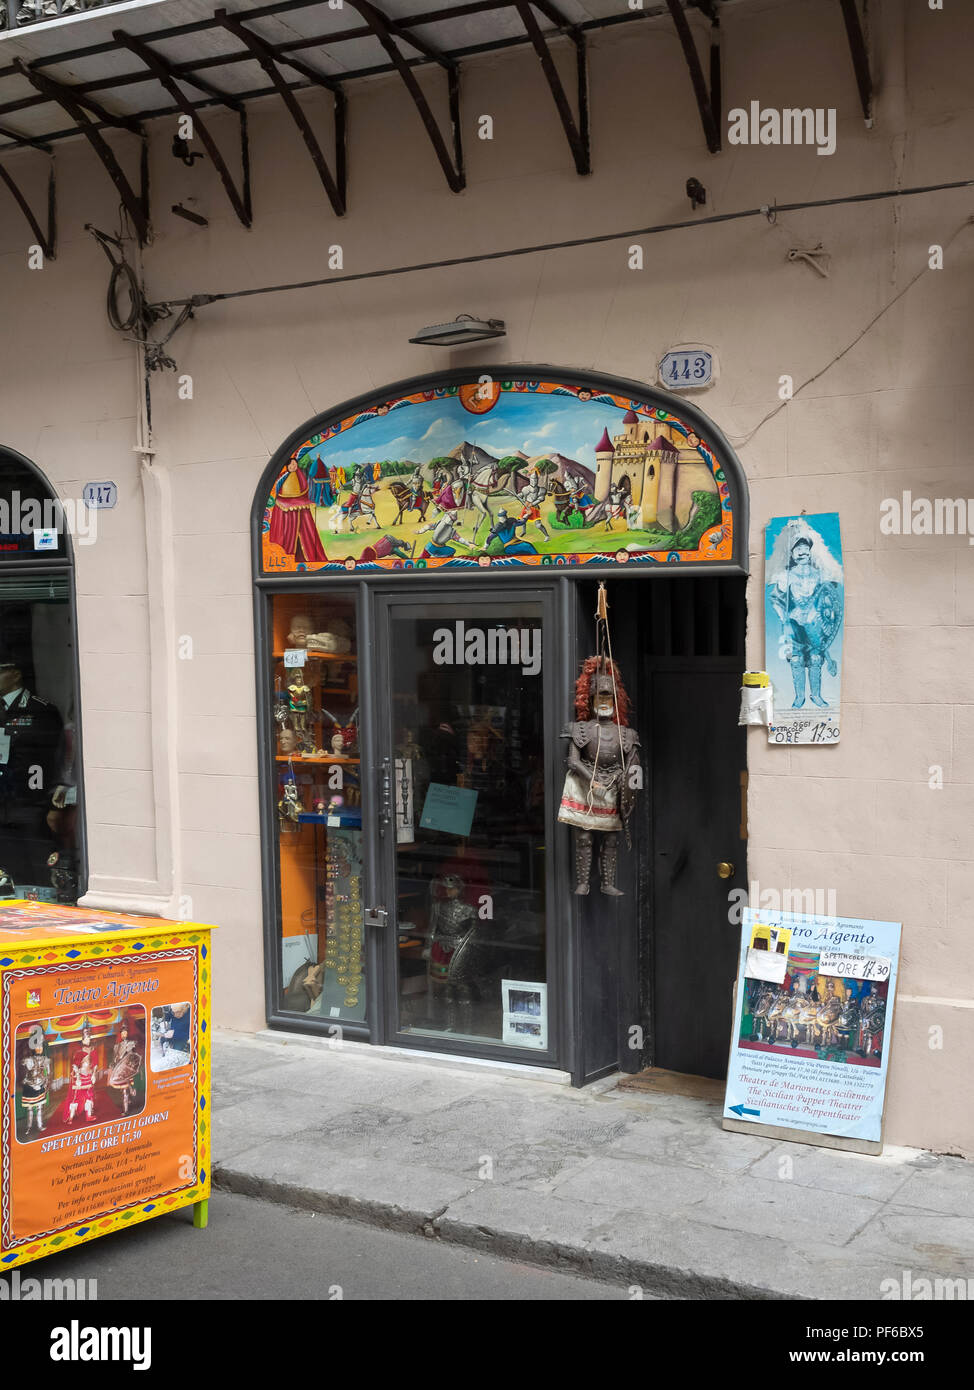 PALERMO, SICILY: Entrance to the Teatro Argento, a Sicilian Puppet Theatre  Stock Photo - Alamy